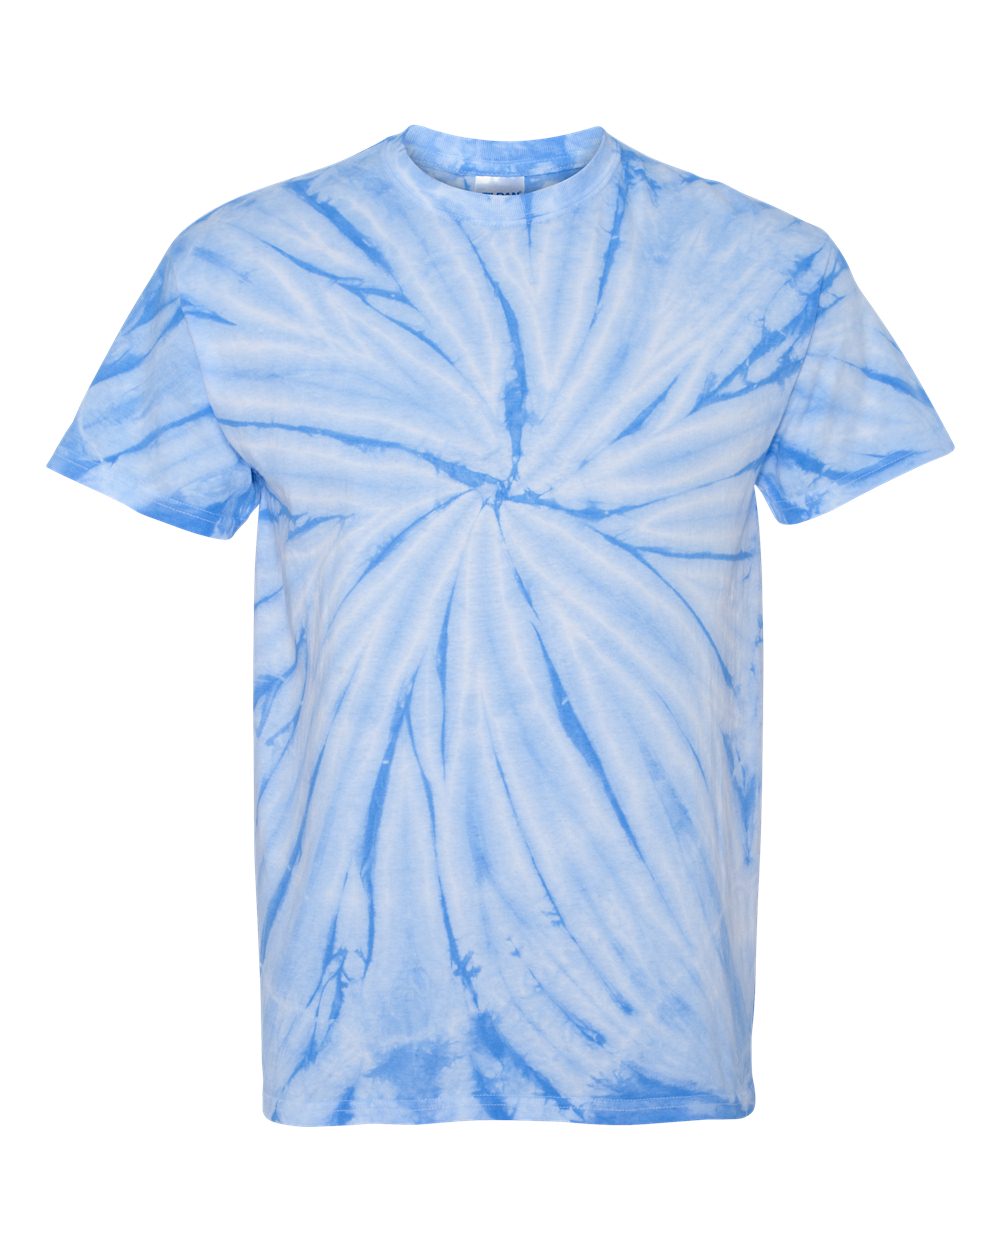 Pretreated Dyenomite 200CY Cyclone Pinwheel Tie-Dyed T-Shirt